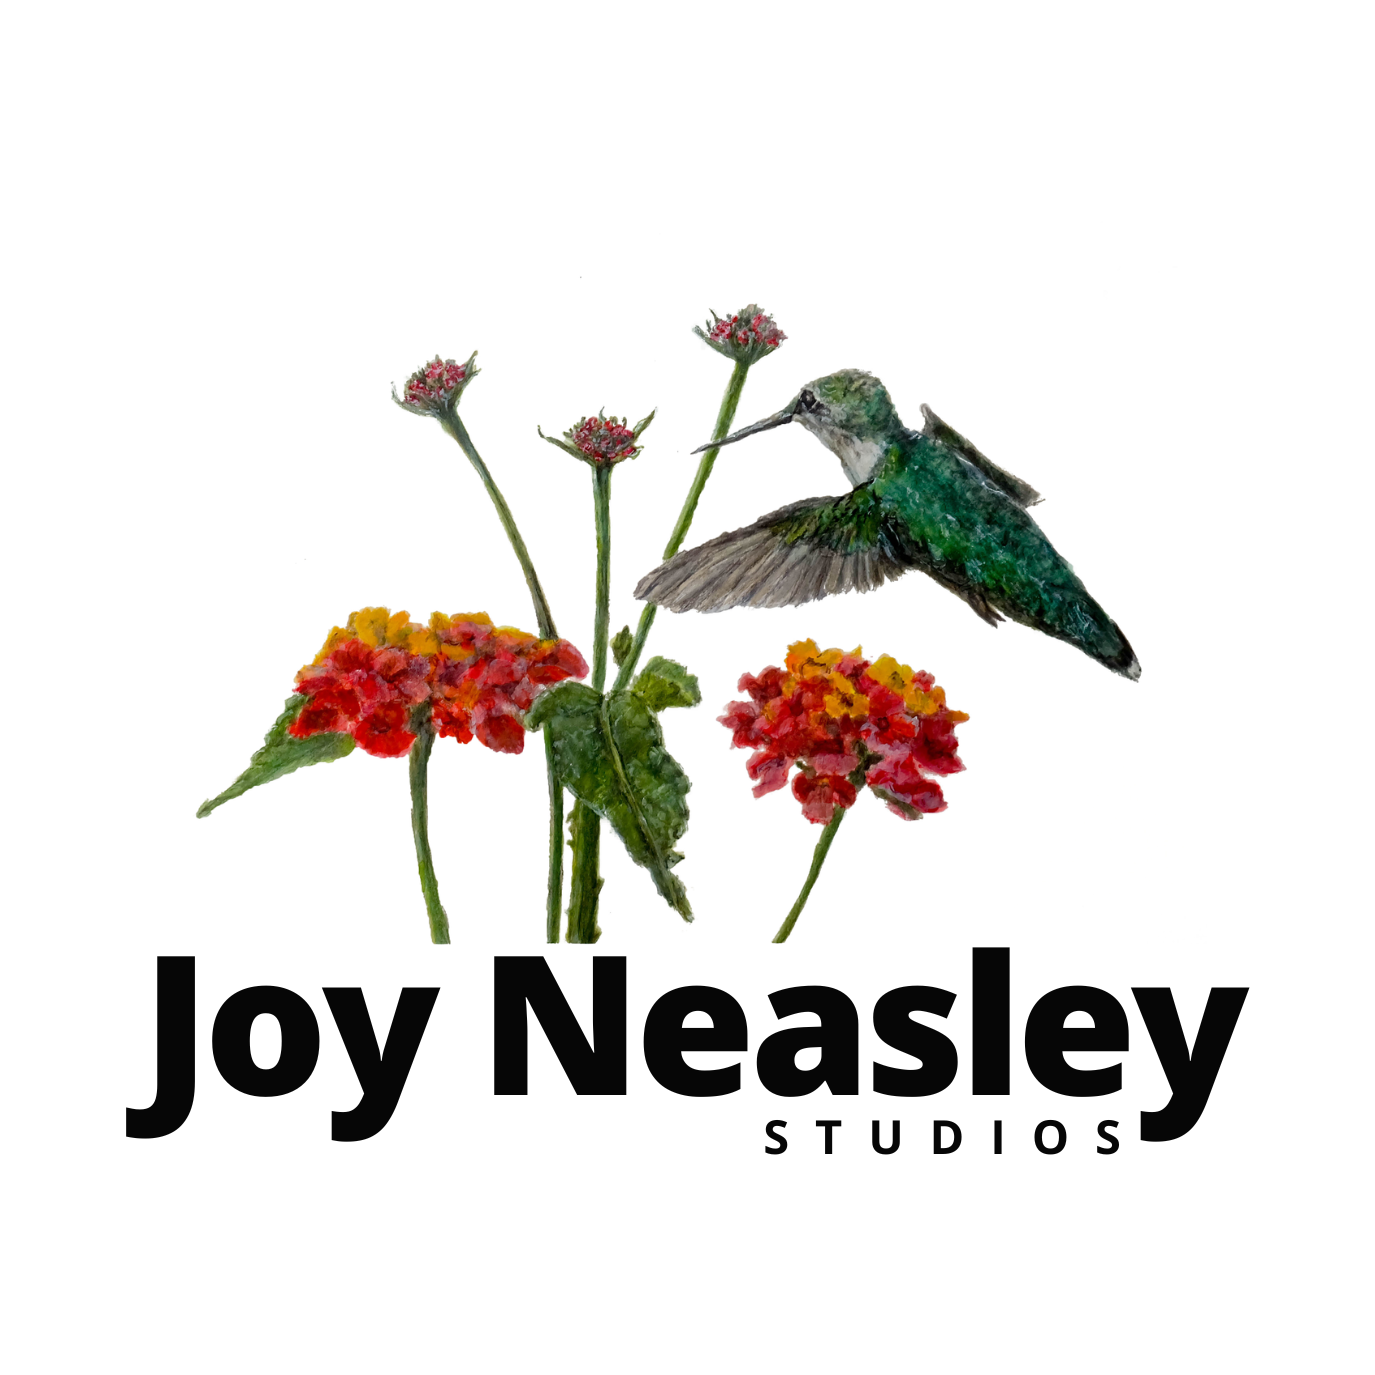 Joy Neasley Studios